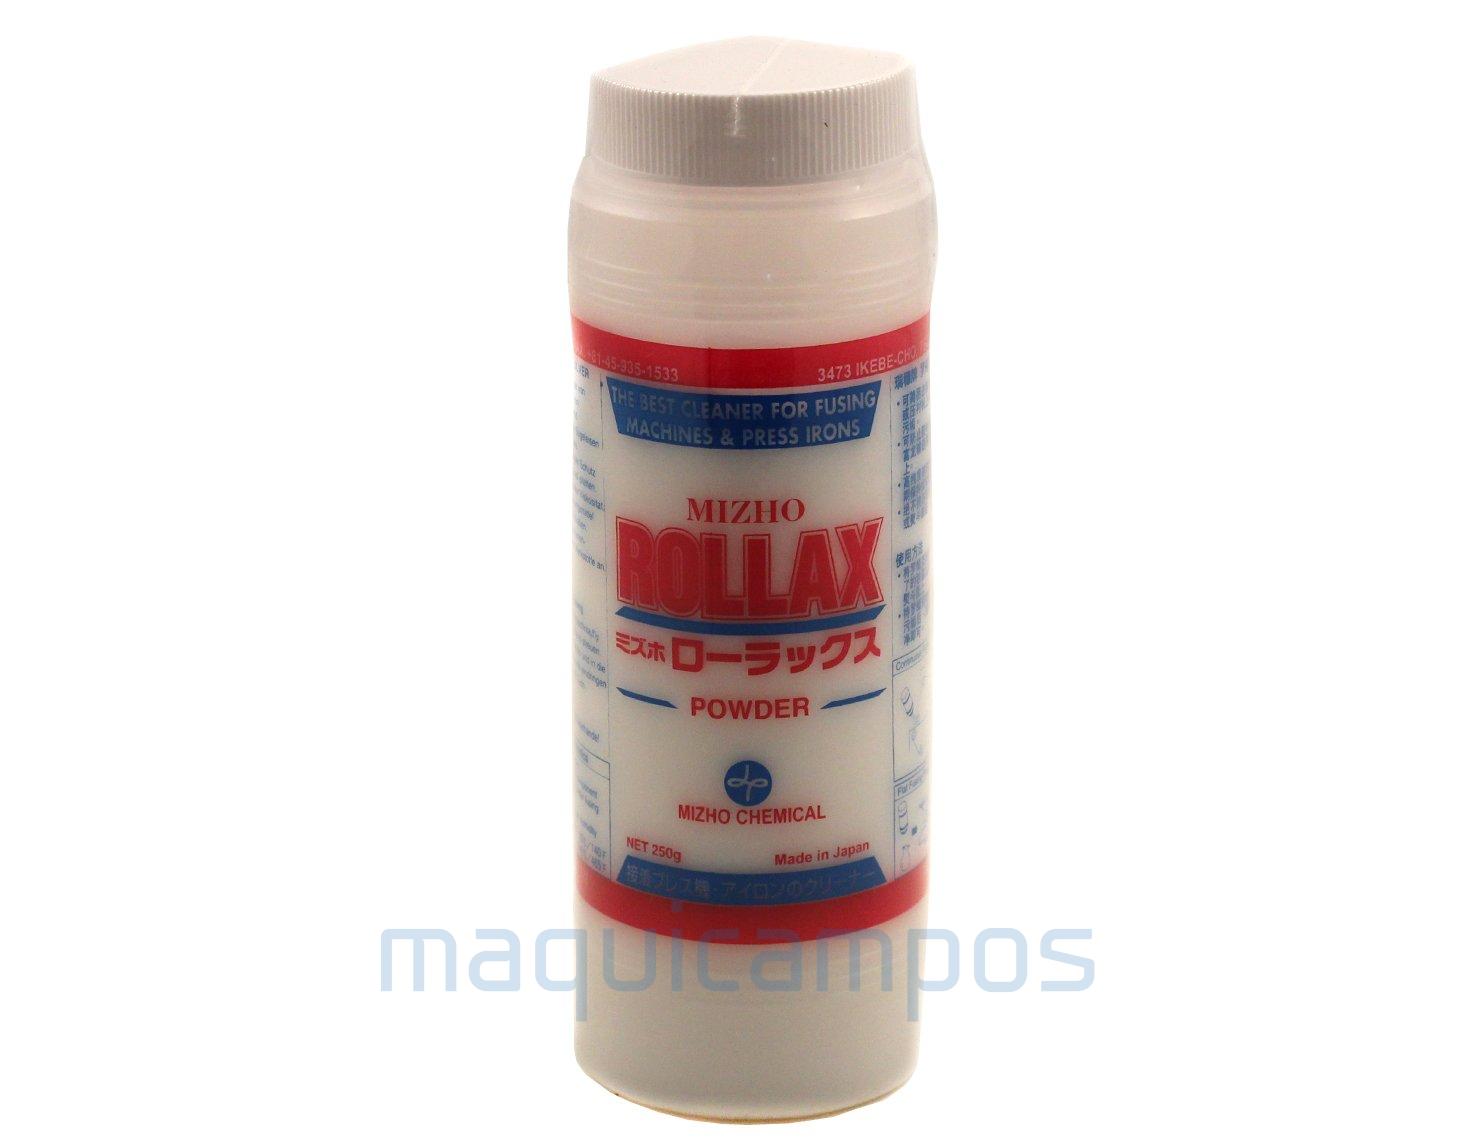 ROLLAX Granular powder for belt cleaning